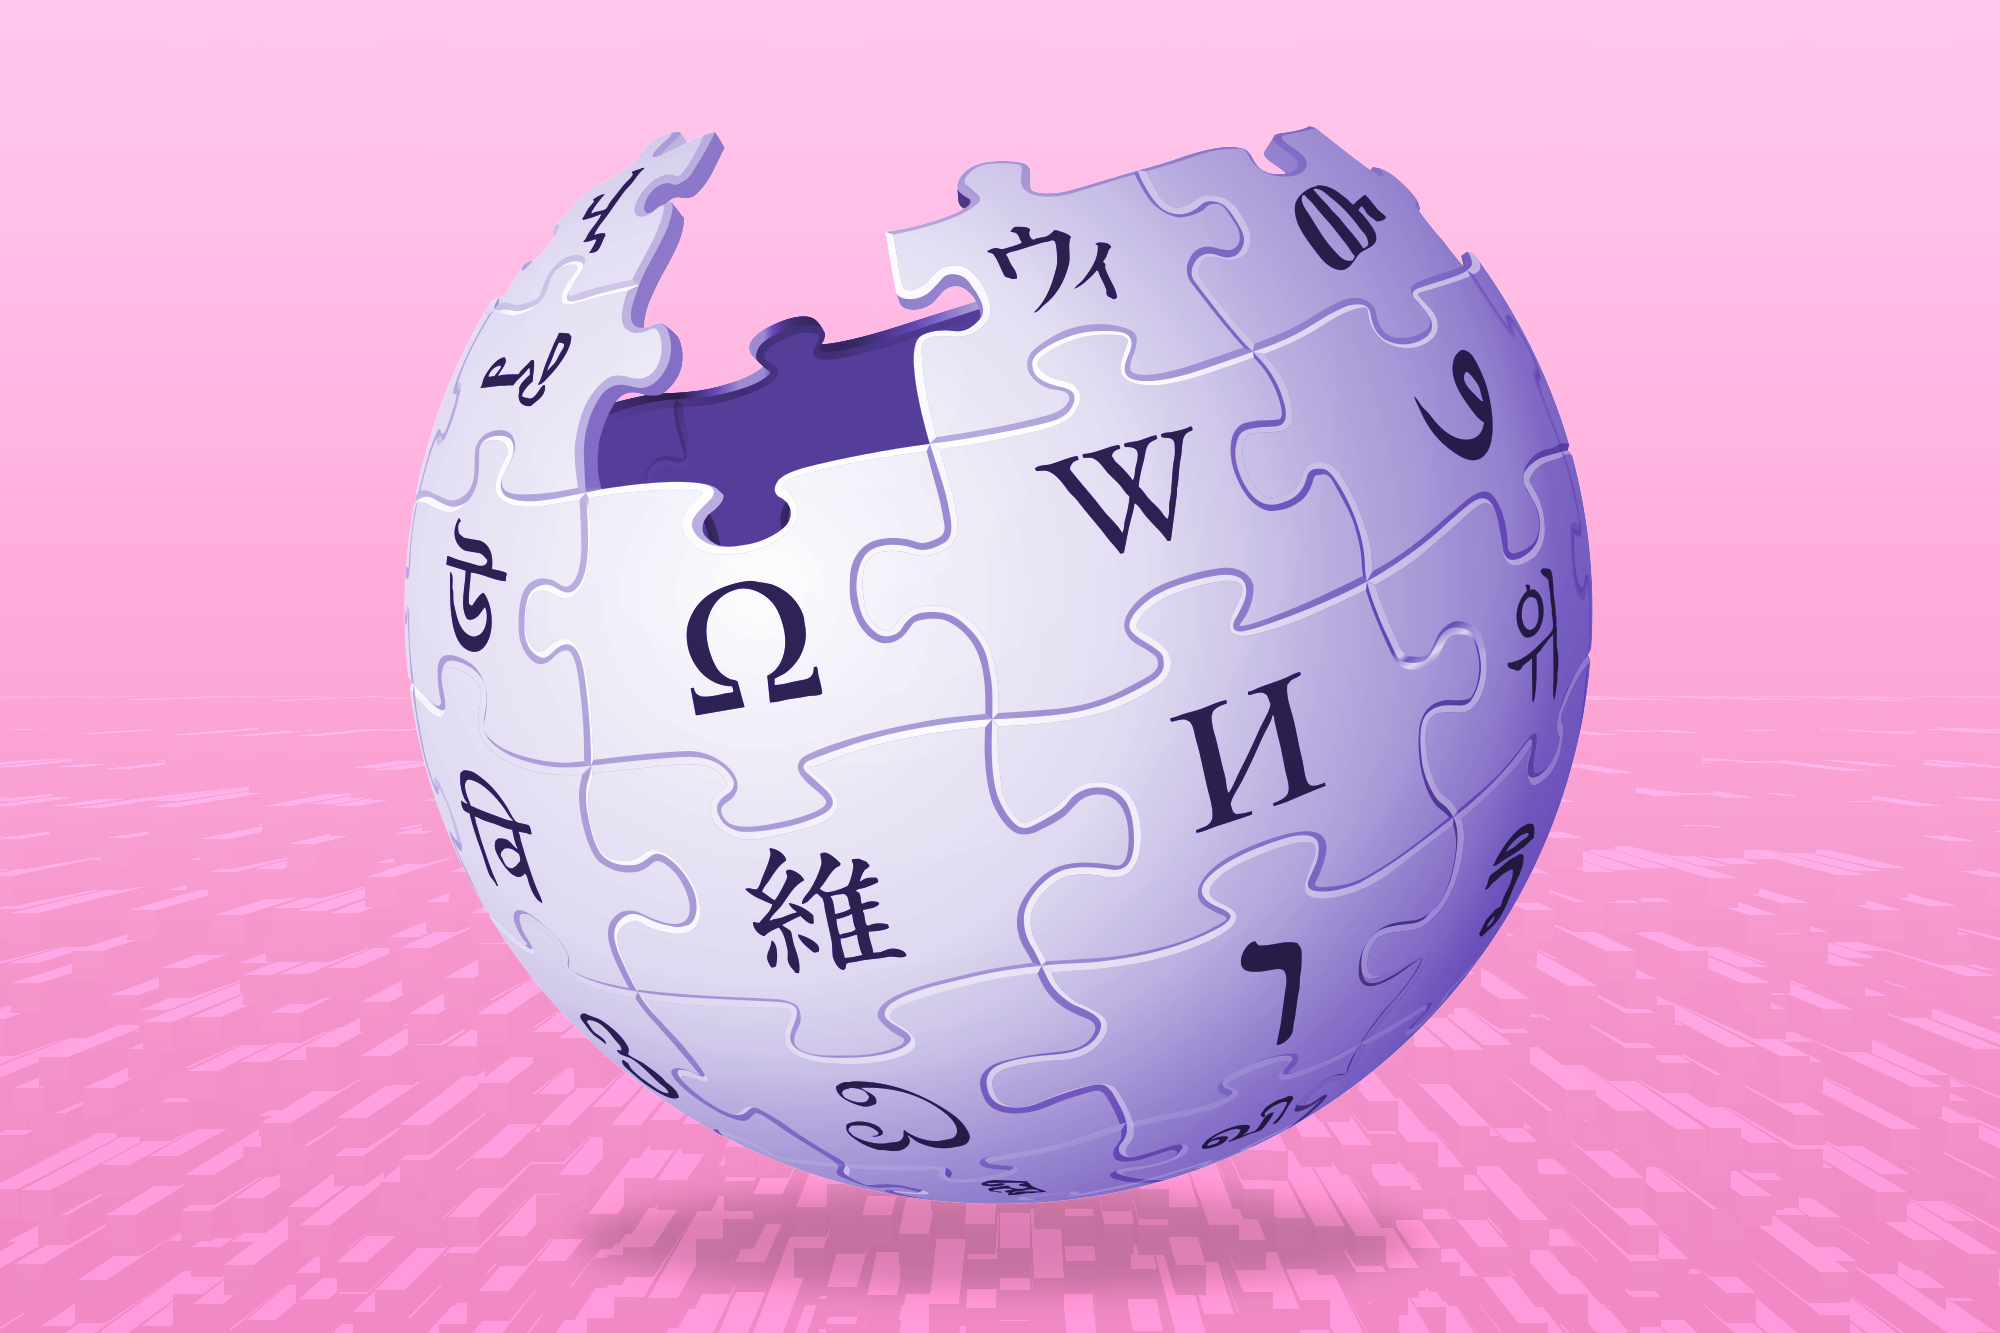 Wyrdsong Wiki